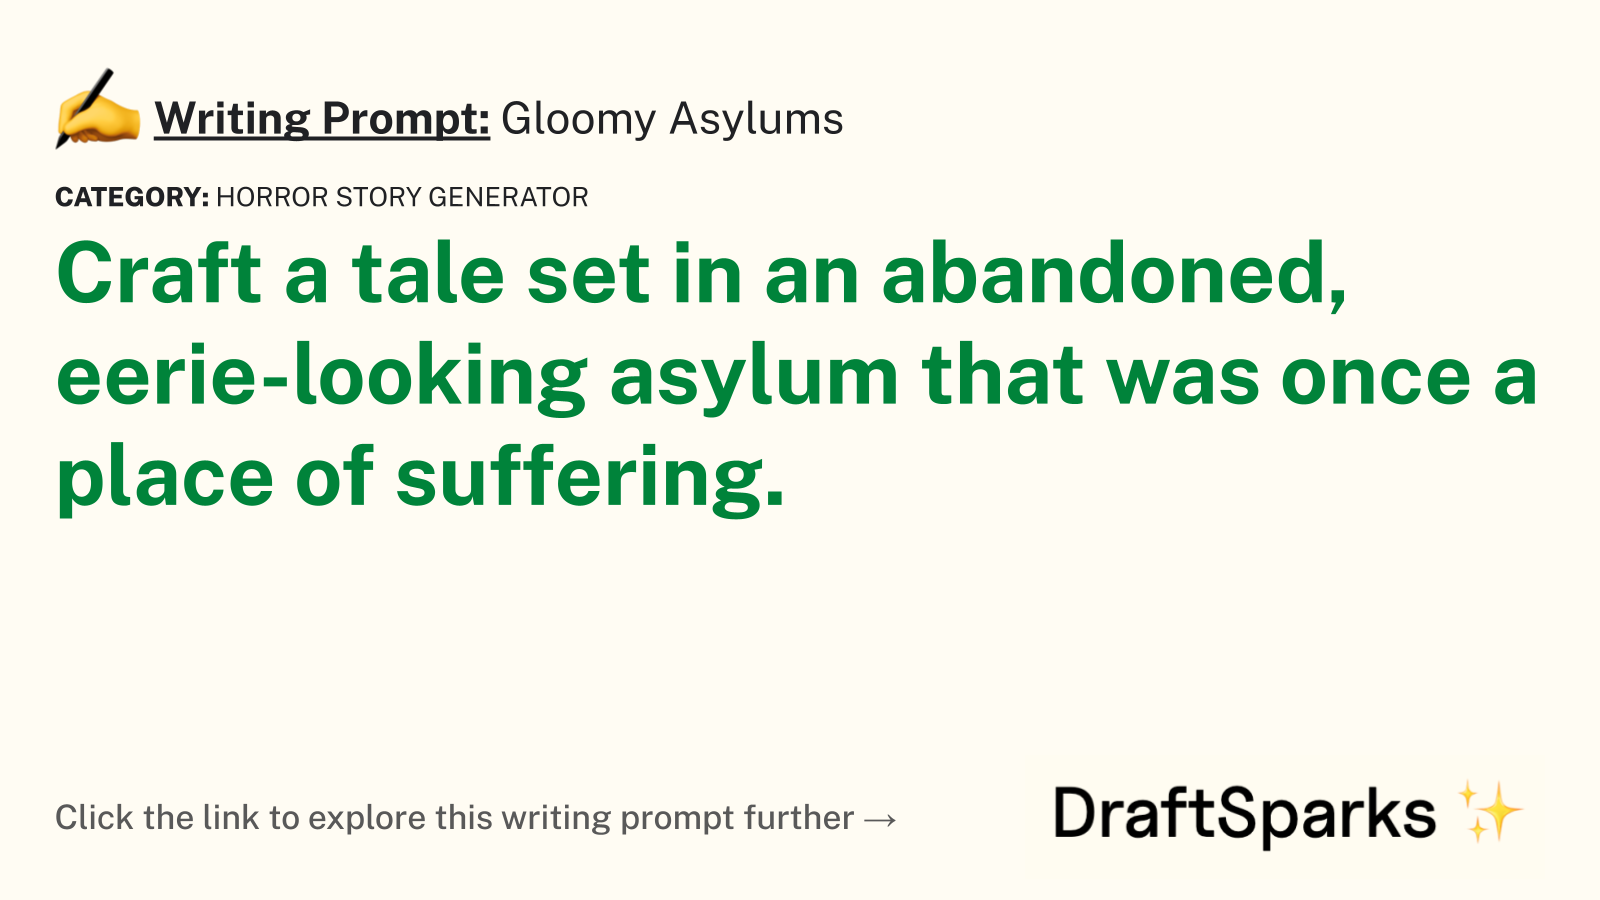 Gloomy Asylums